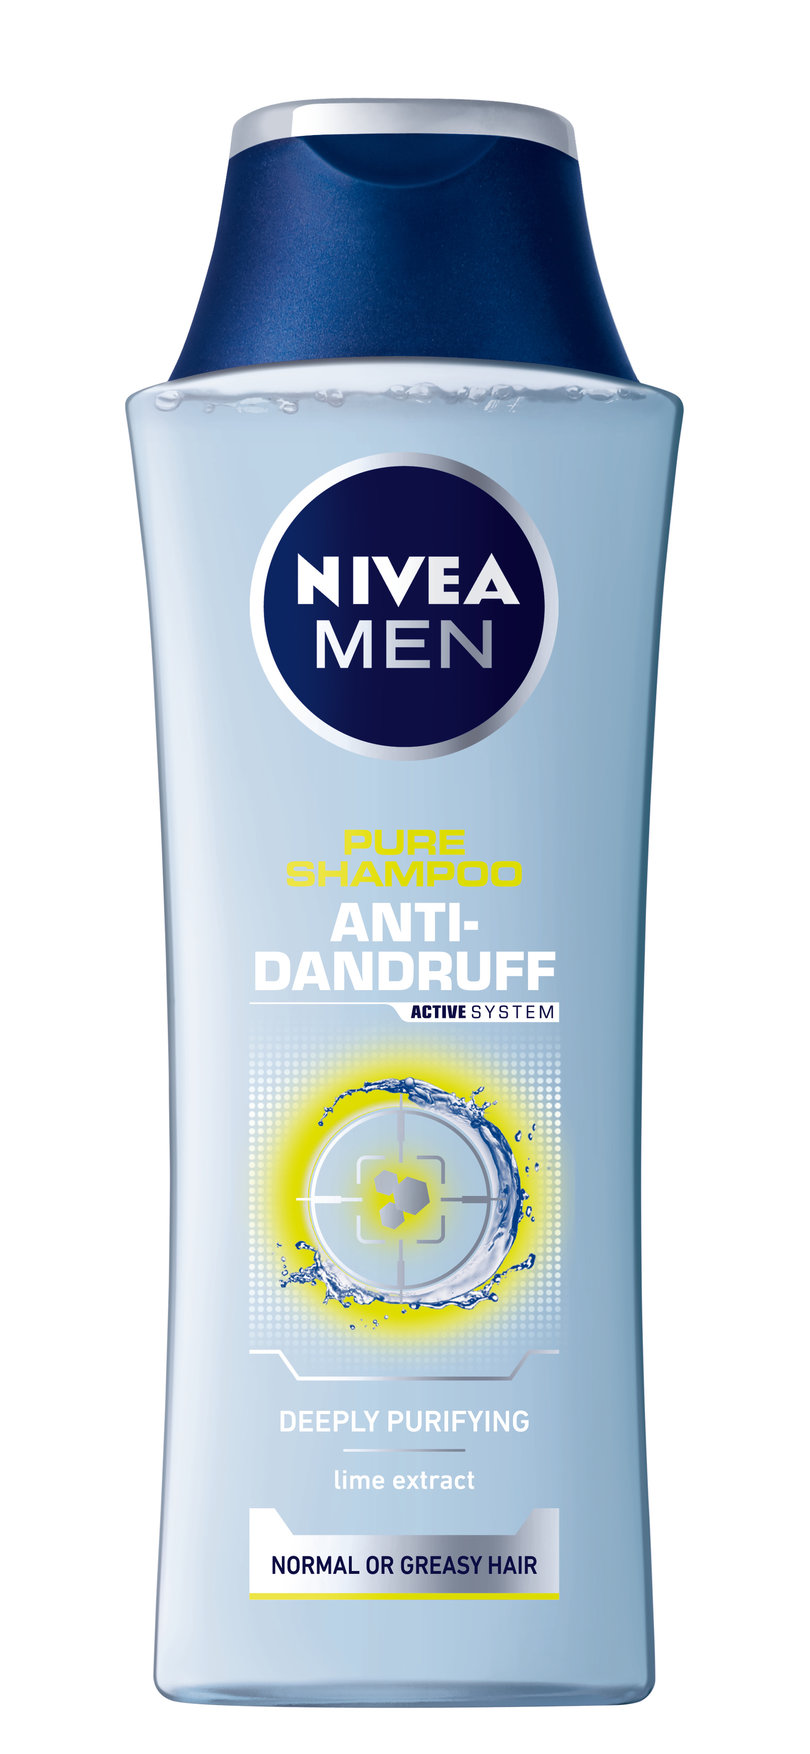 Shampoo Pure Nivea Men šamponi protiv peruti